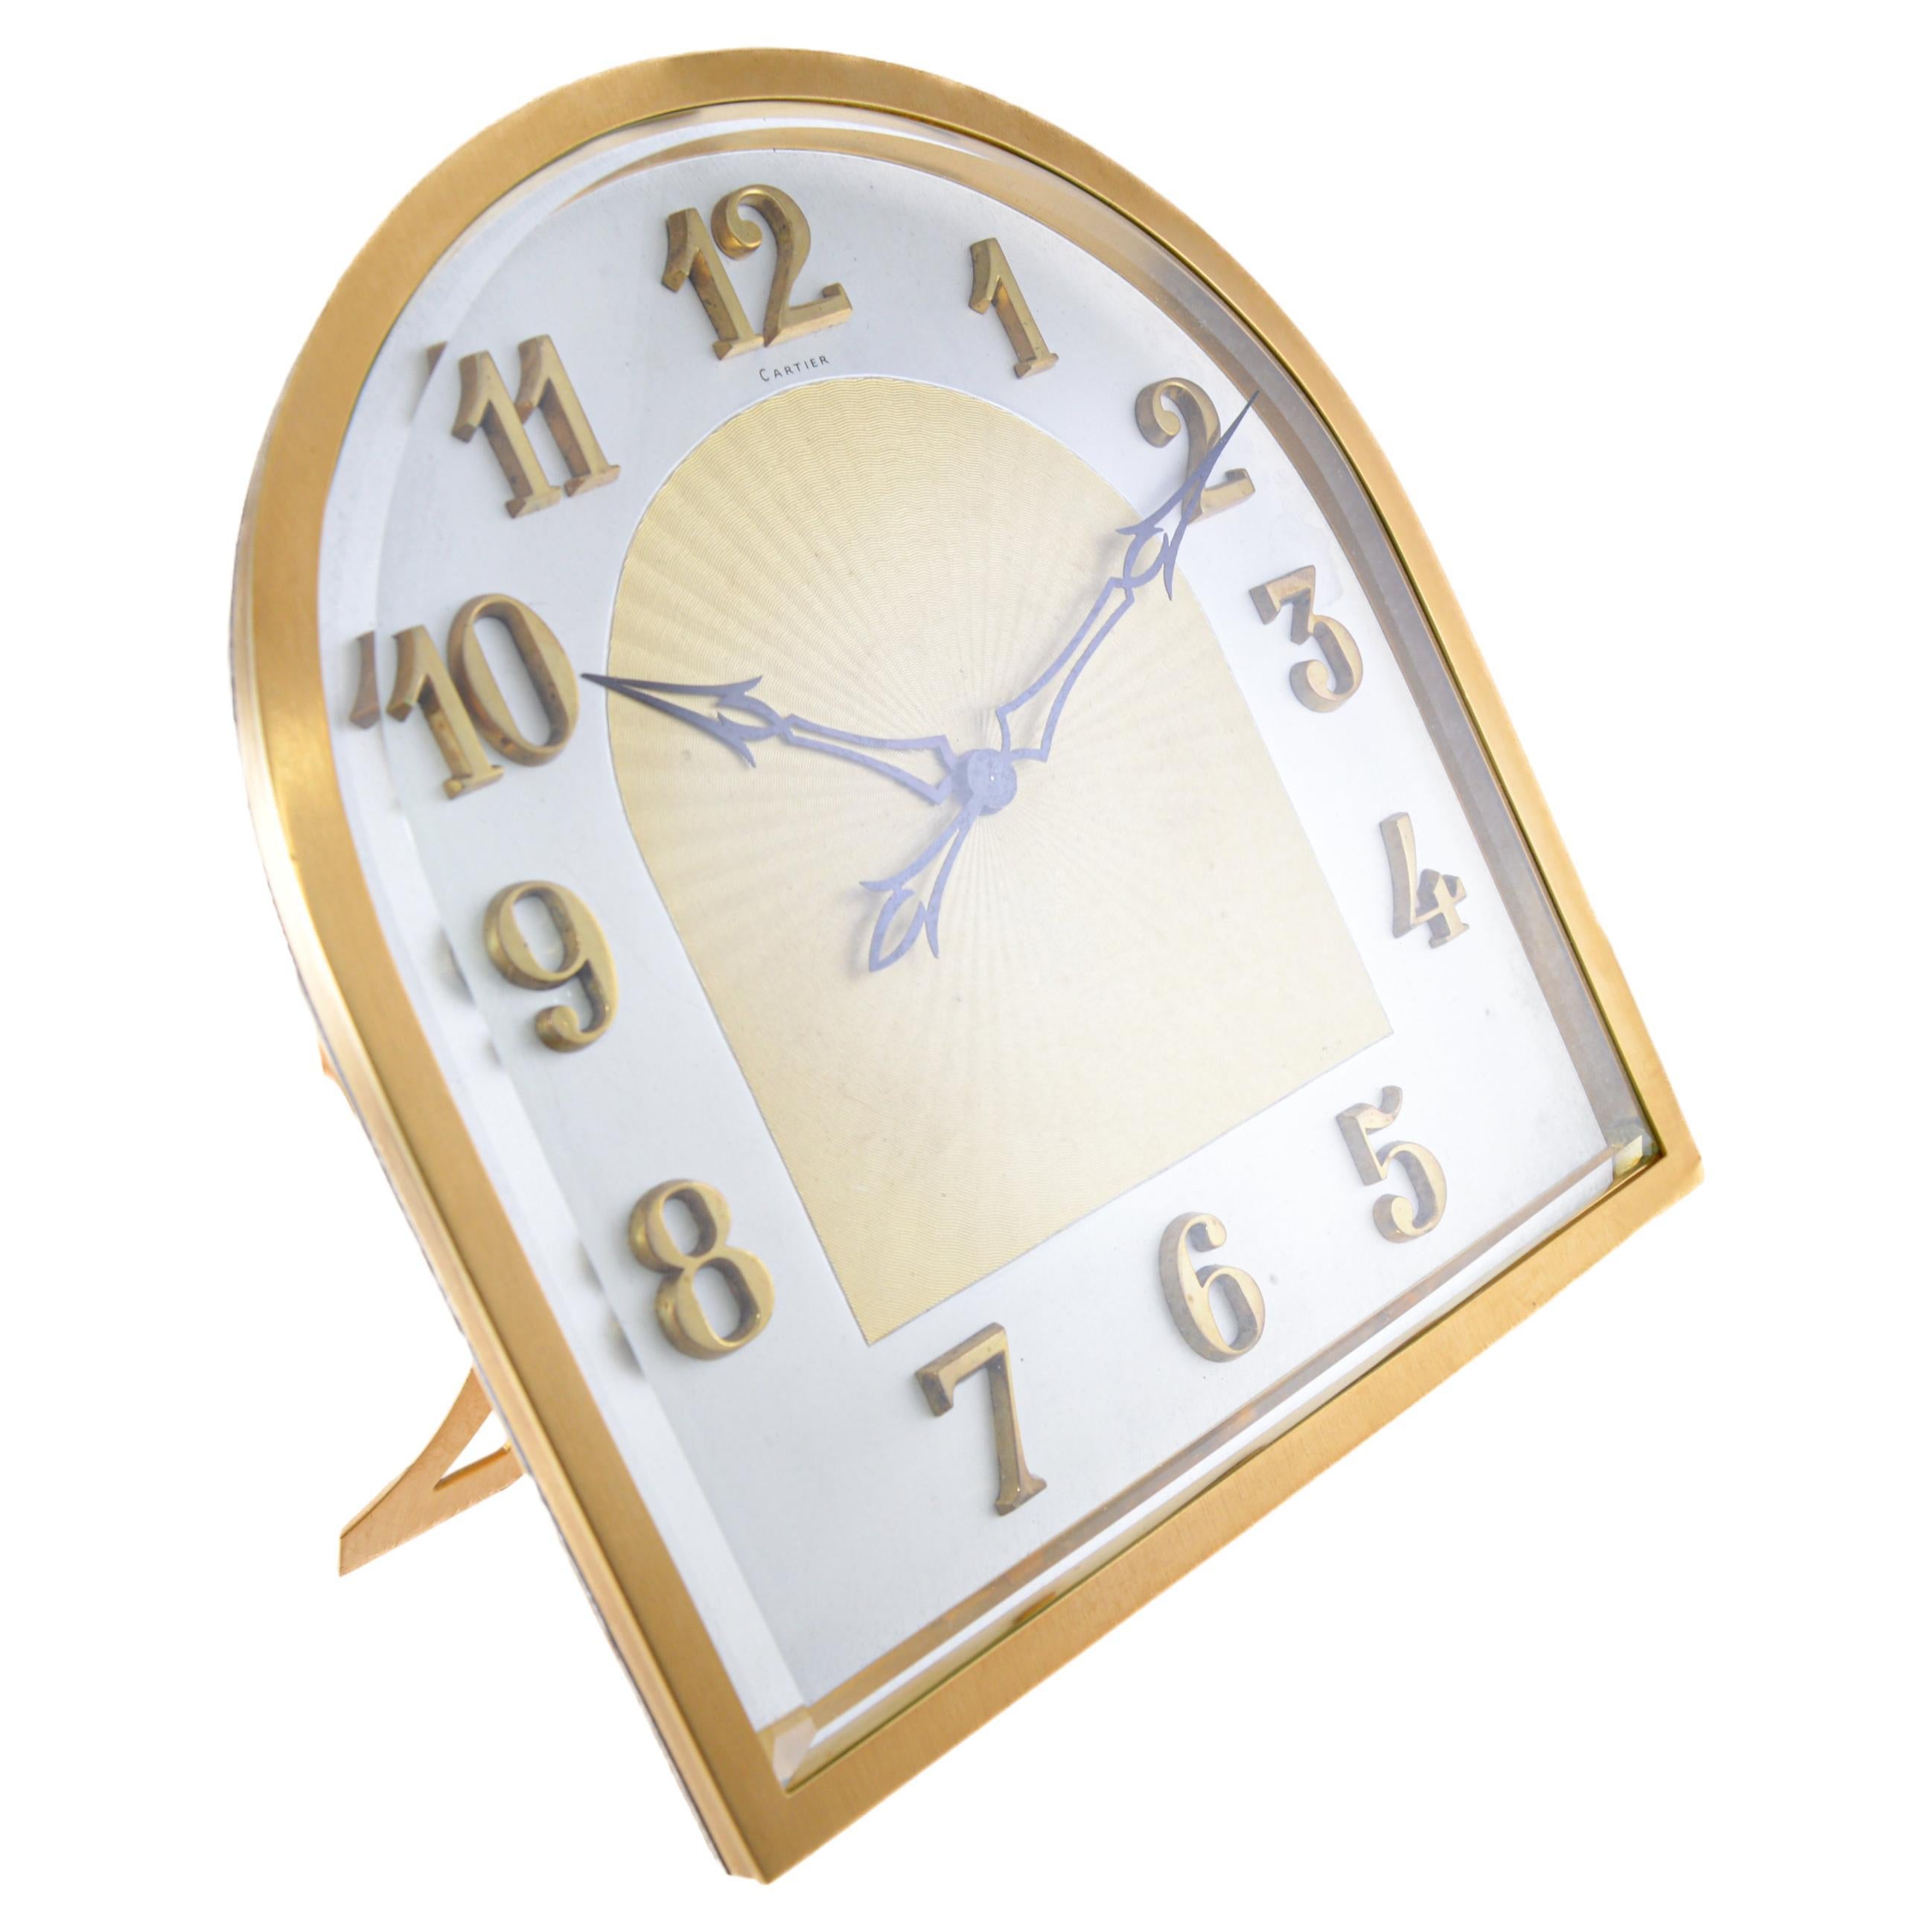 Cartier European Watch & Clock Co. Gilded Art Deco Chiming Desk Clock 1930's For Sale 1